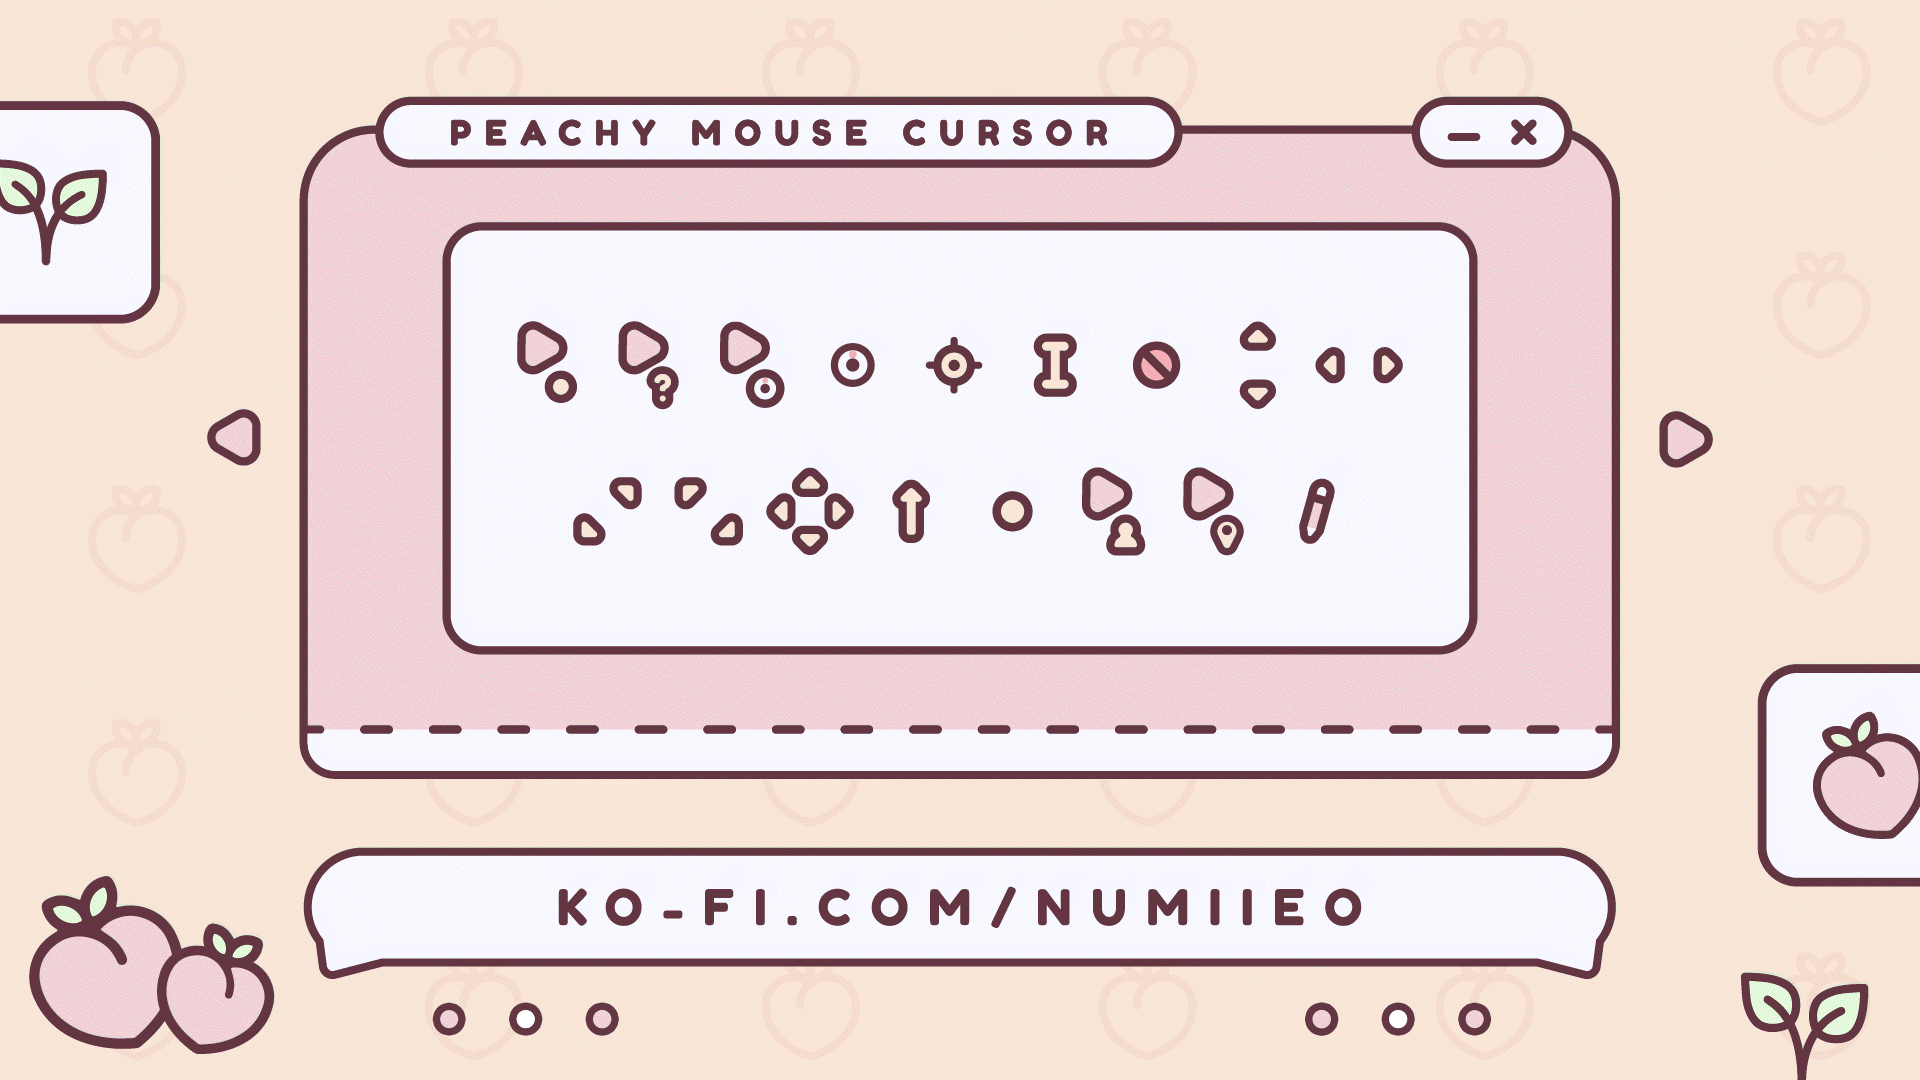 Peachy Mouse Cursor by numiieo on DeviantArt